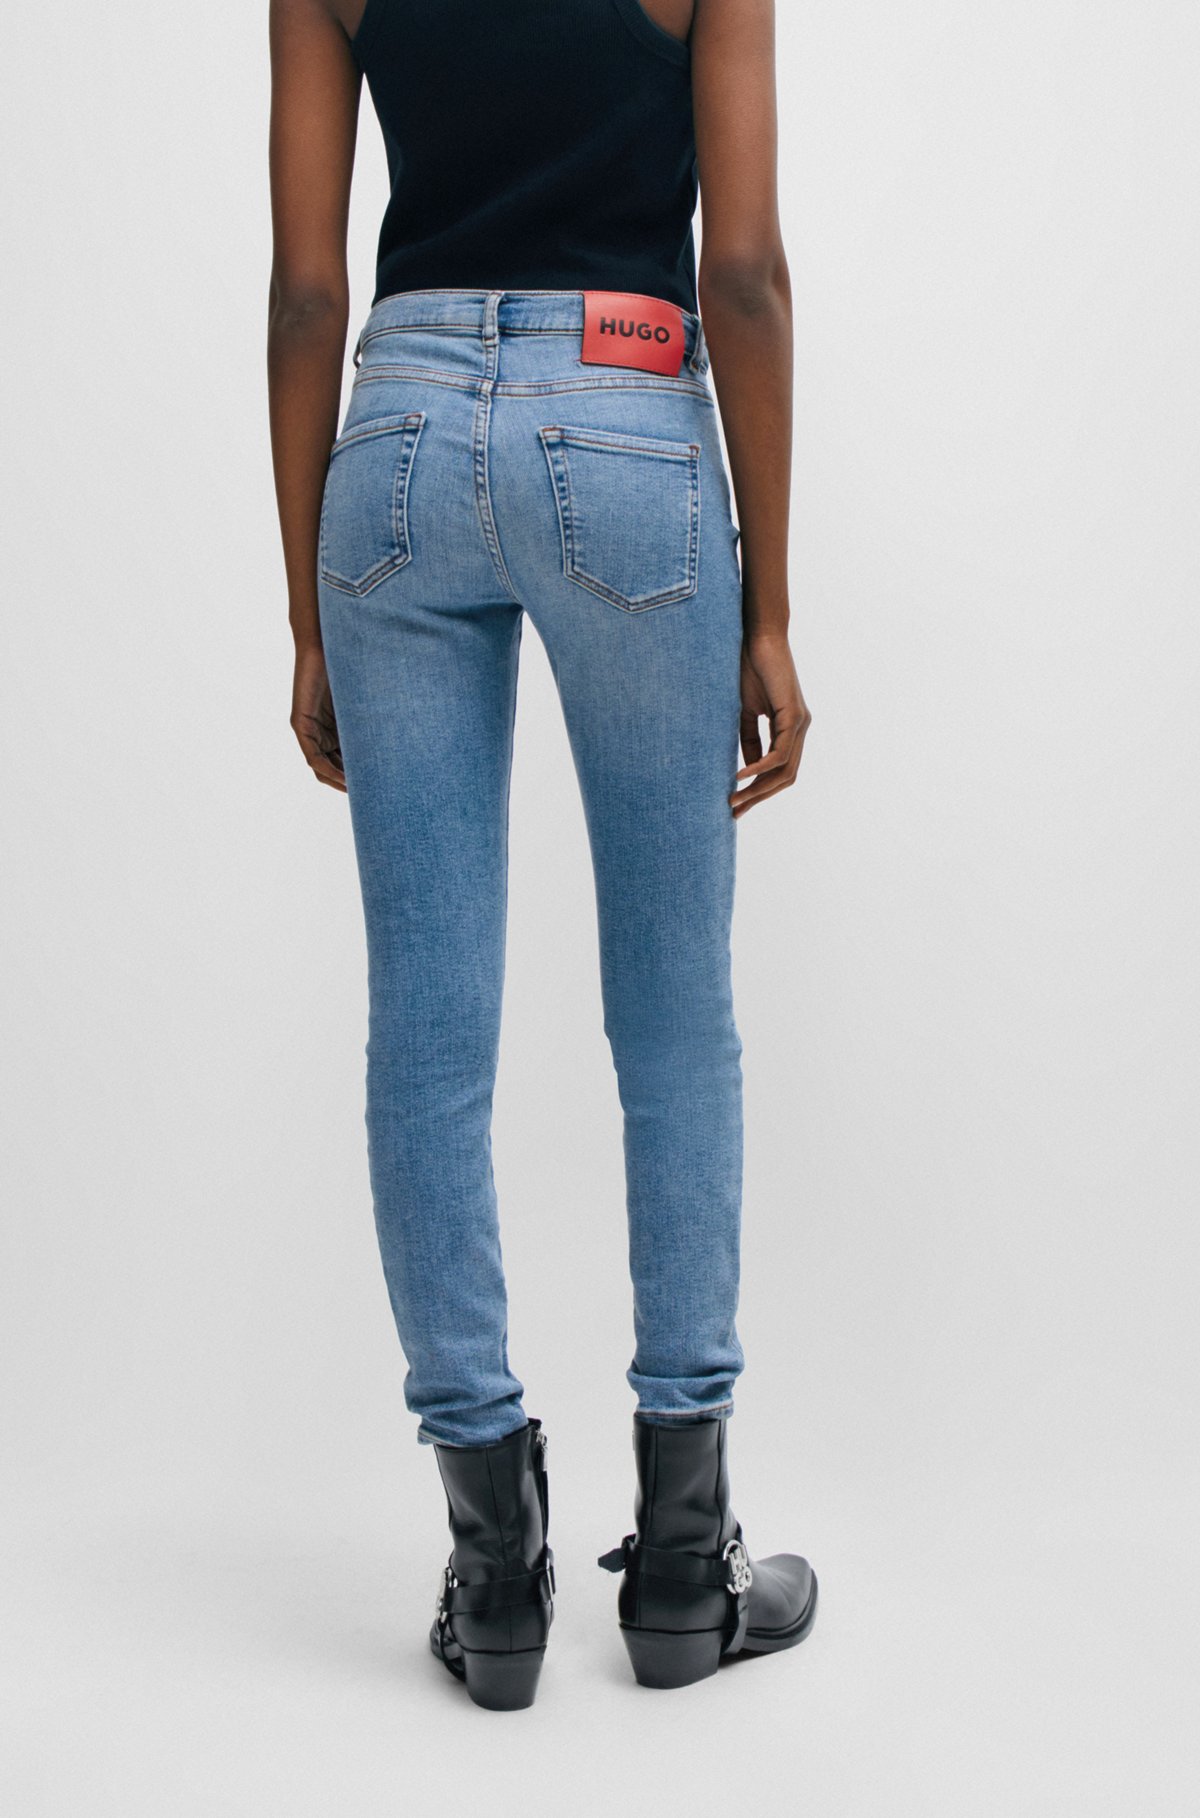 jeans in HUGO denim blue stretch Skinny-fit -